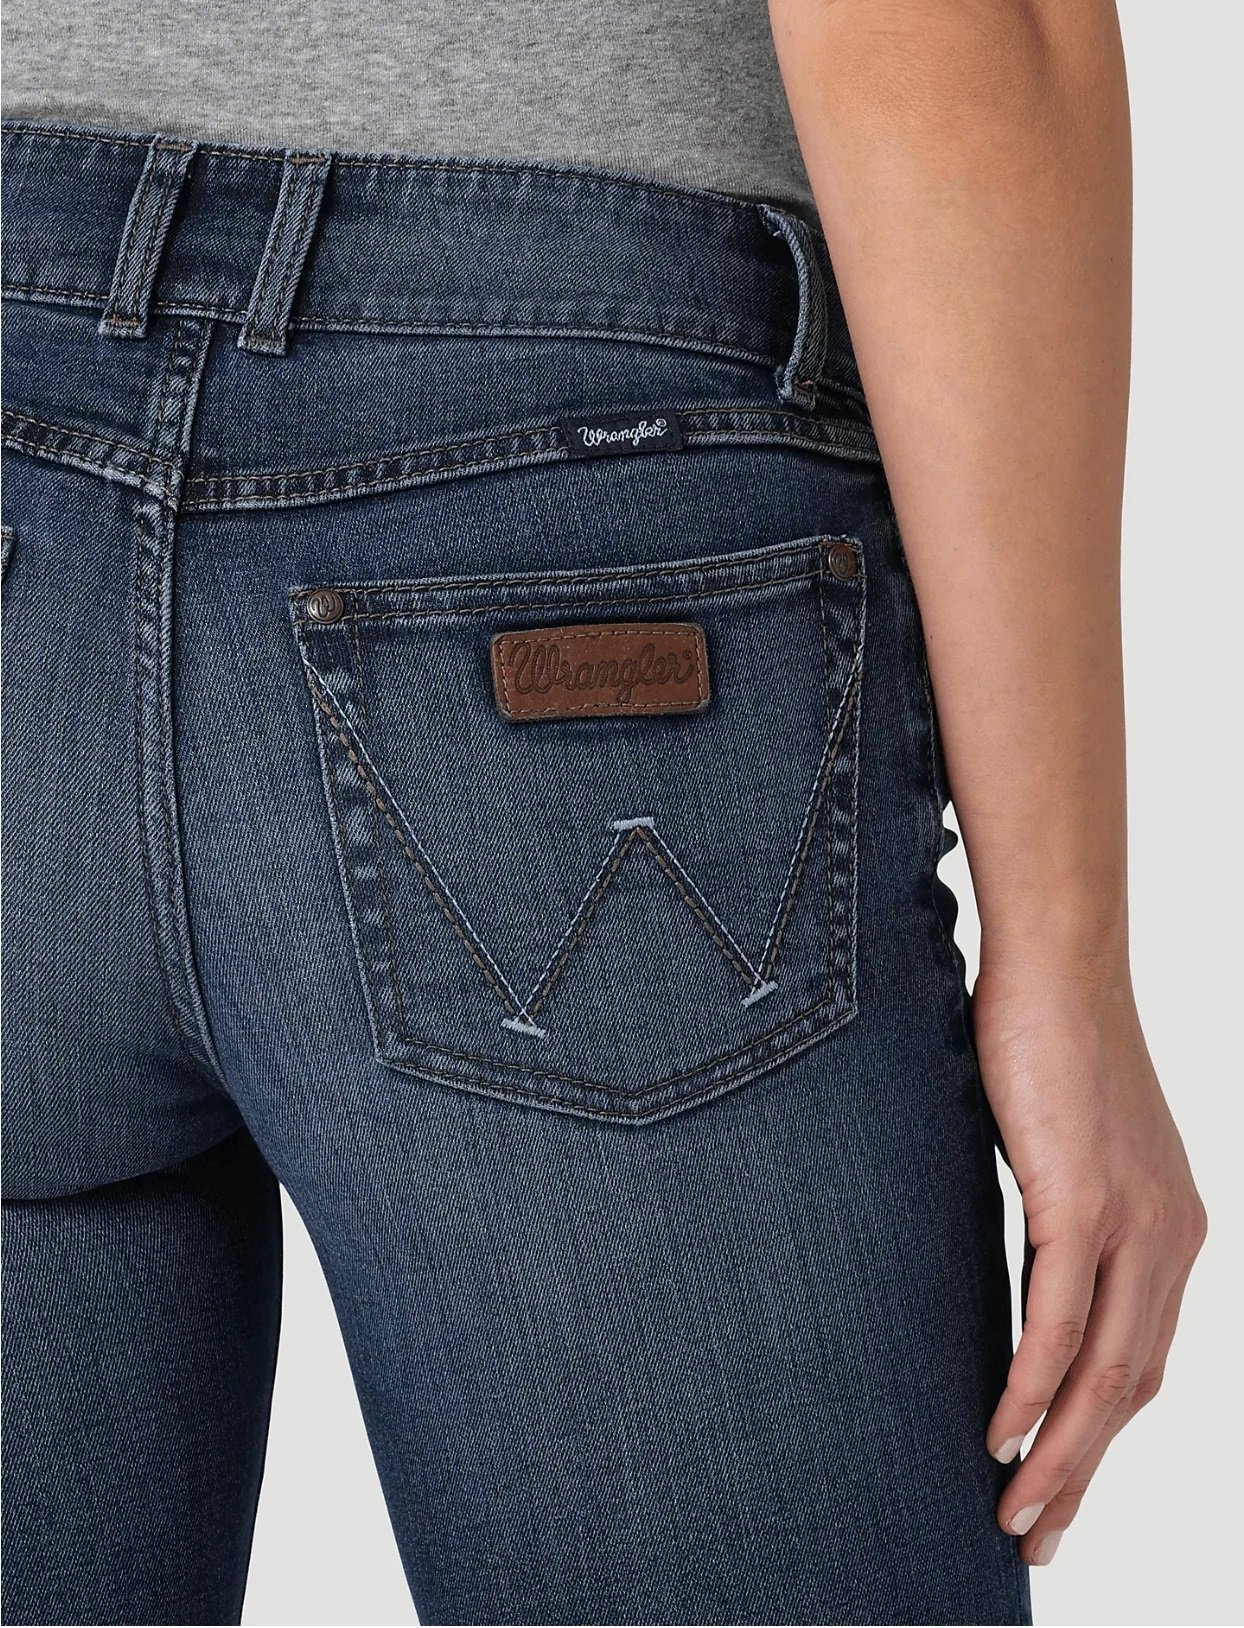 https://jimmyswesternwear.com/media/catalog/product/rdi/rdi/womens-wrangler-retro-mae-dark-wash-trouser-jeans-112328737_2.png?width=1250&height=1000&store=default&image-type=image